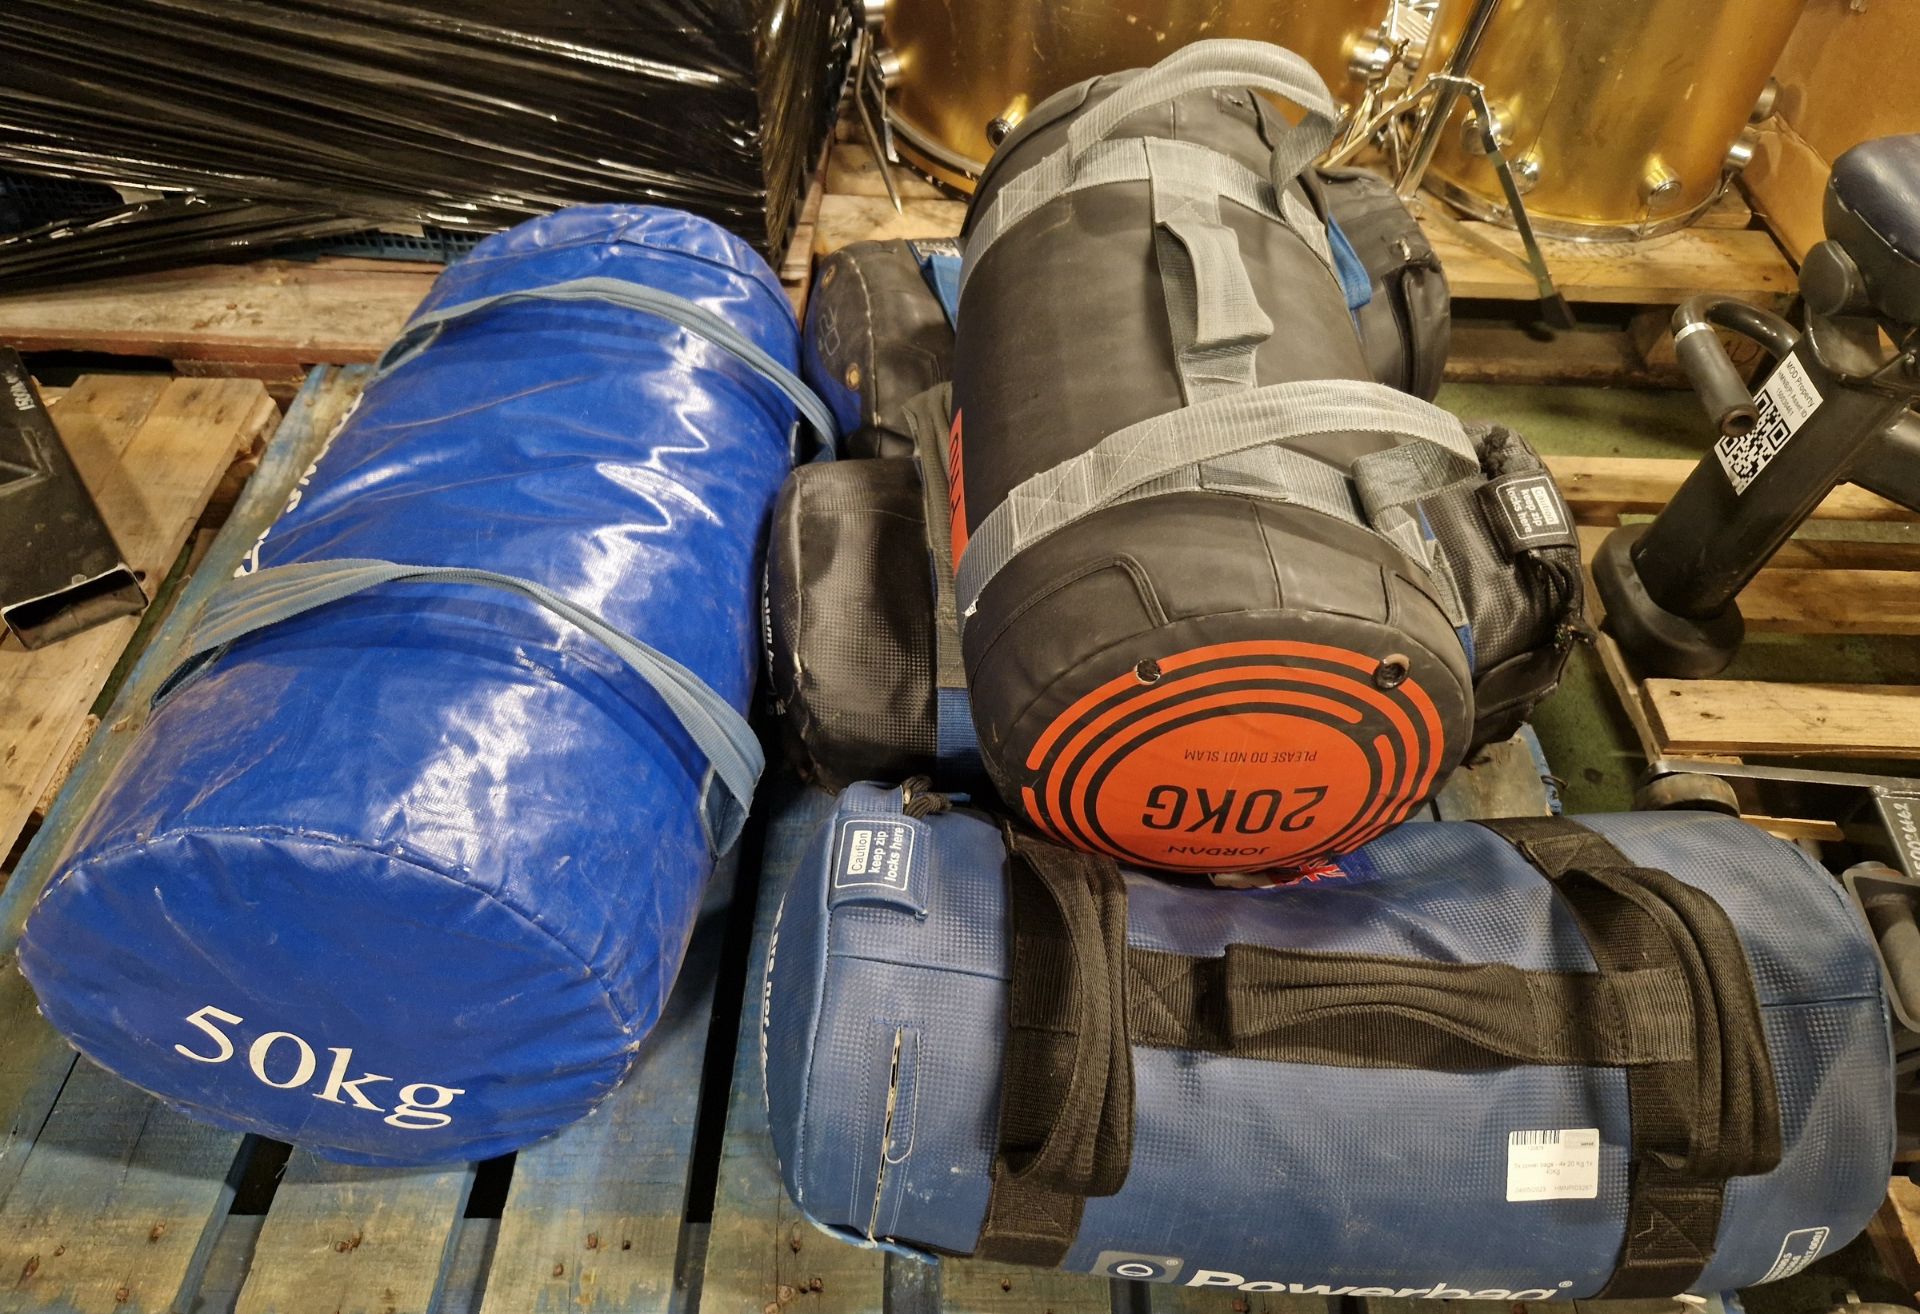 4x 20kg power bags, 1x 50kg power bag